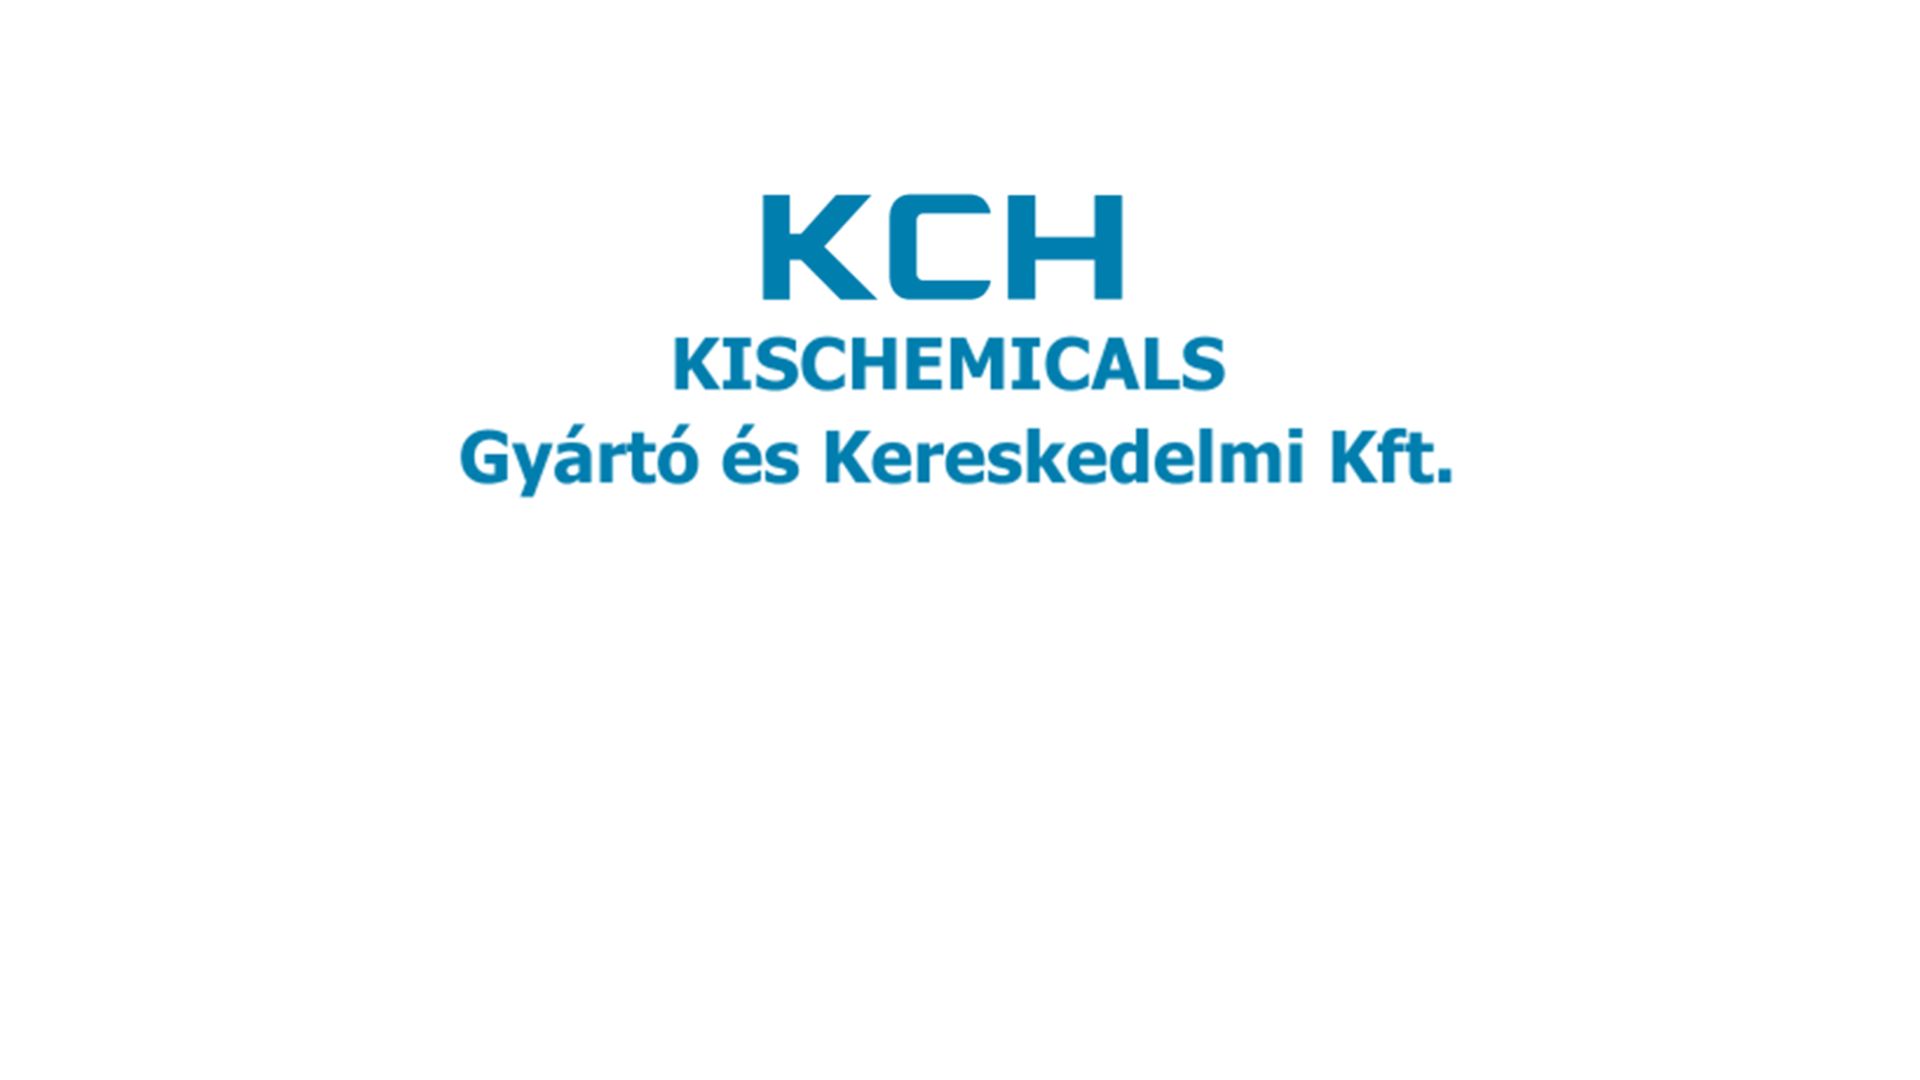 Kischemicals